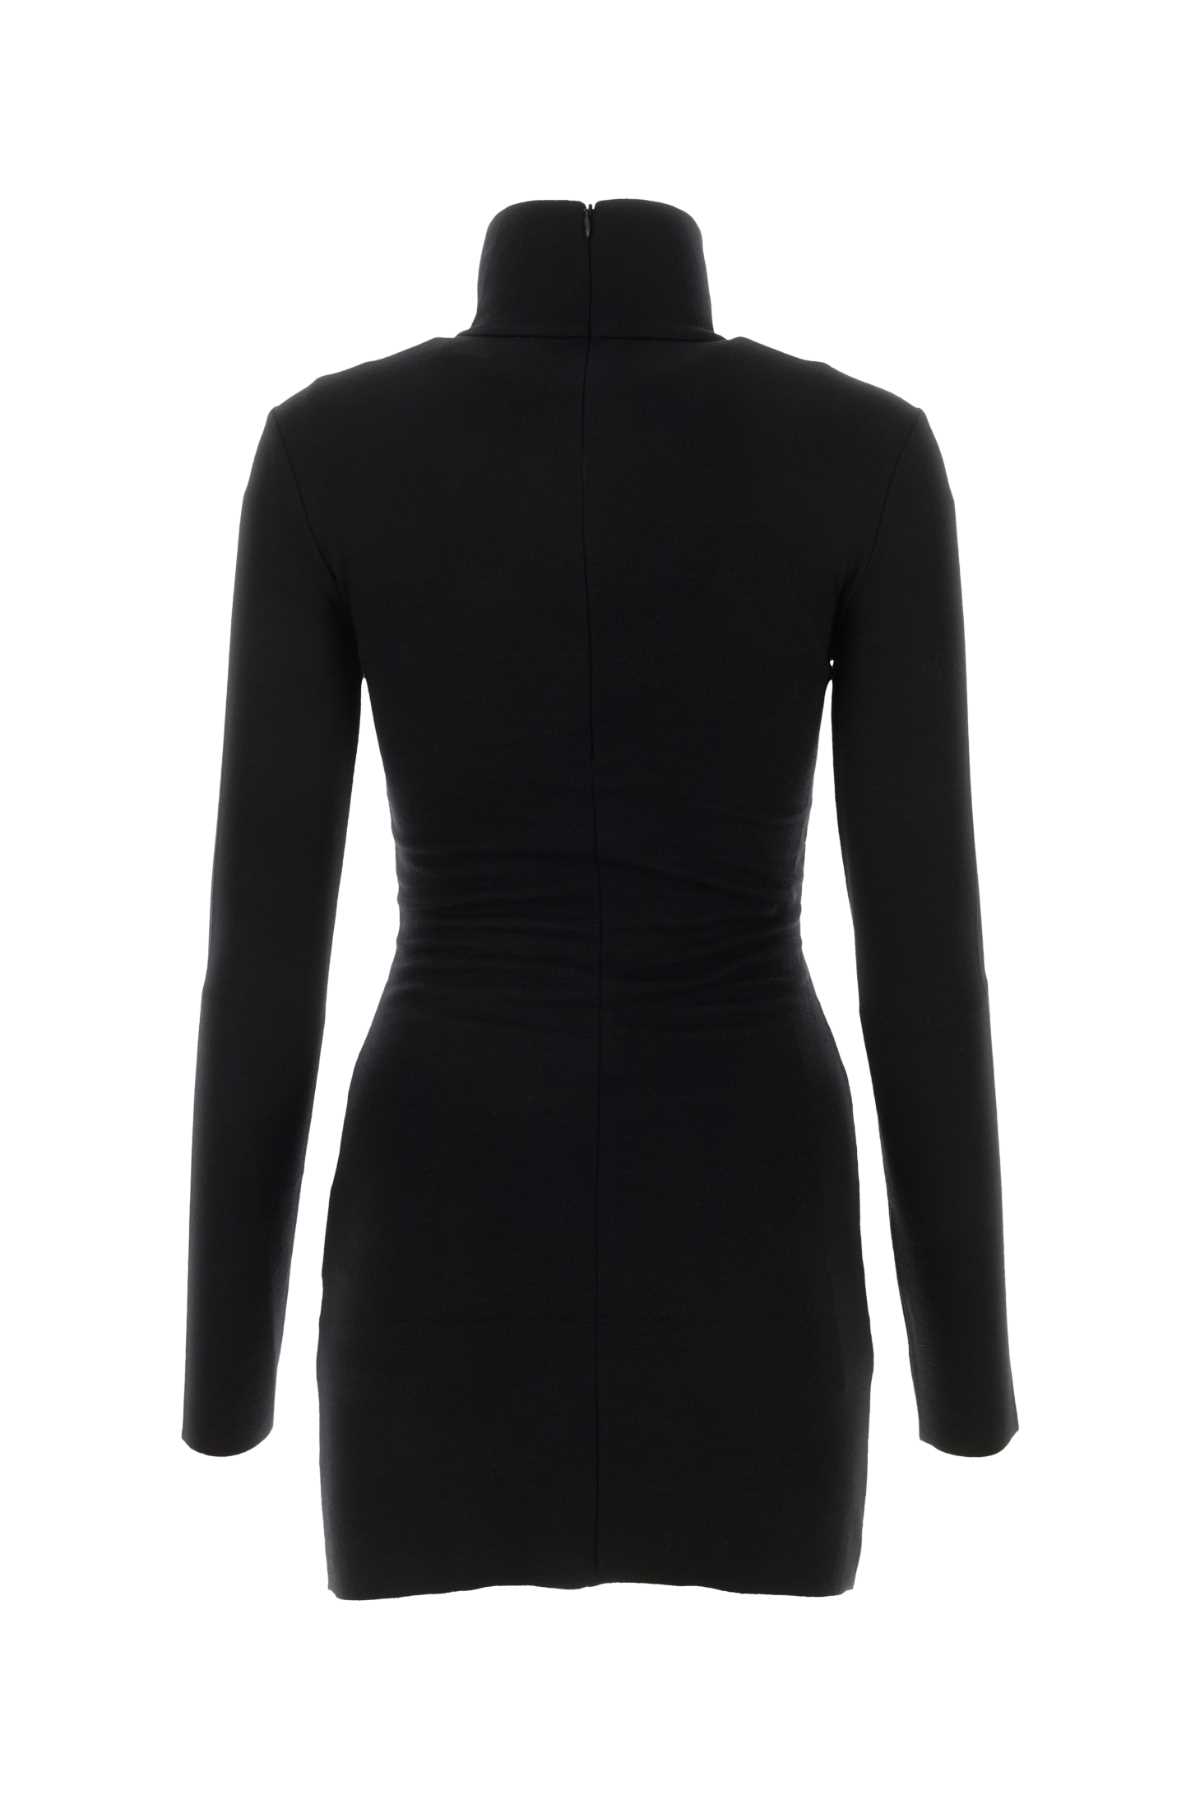 Shop Ami Alexandre Mattiussi Black Stretch Lyocell Blend Mini Dress